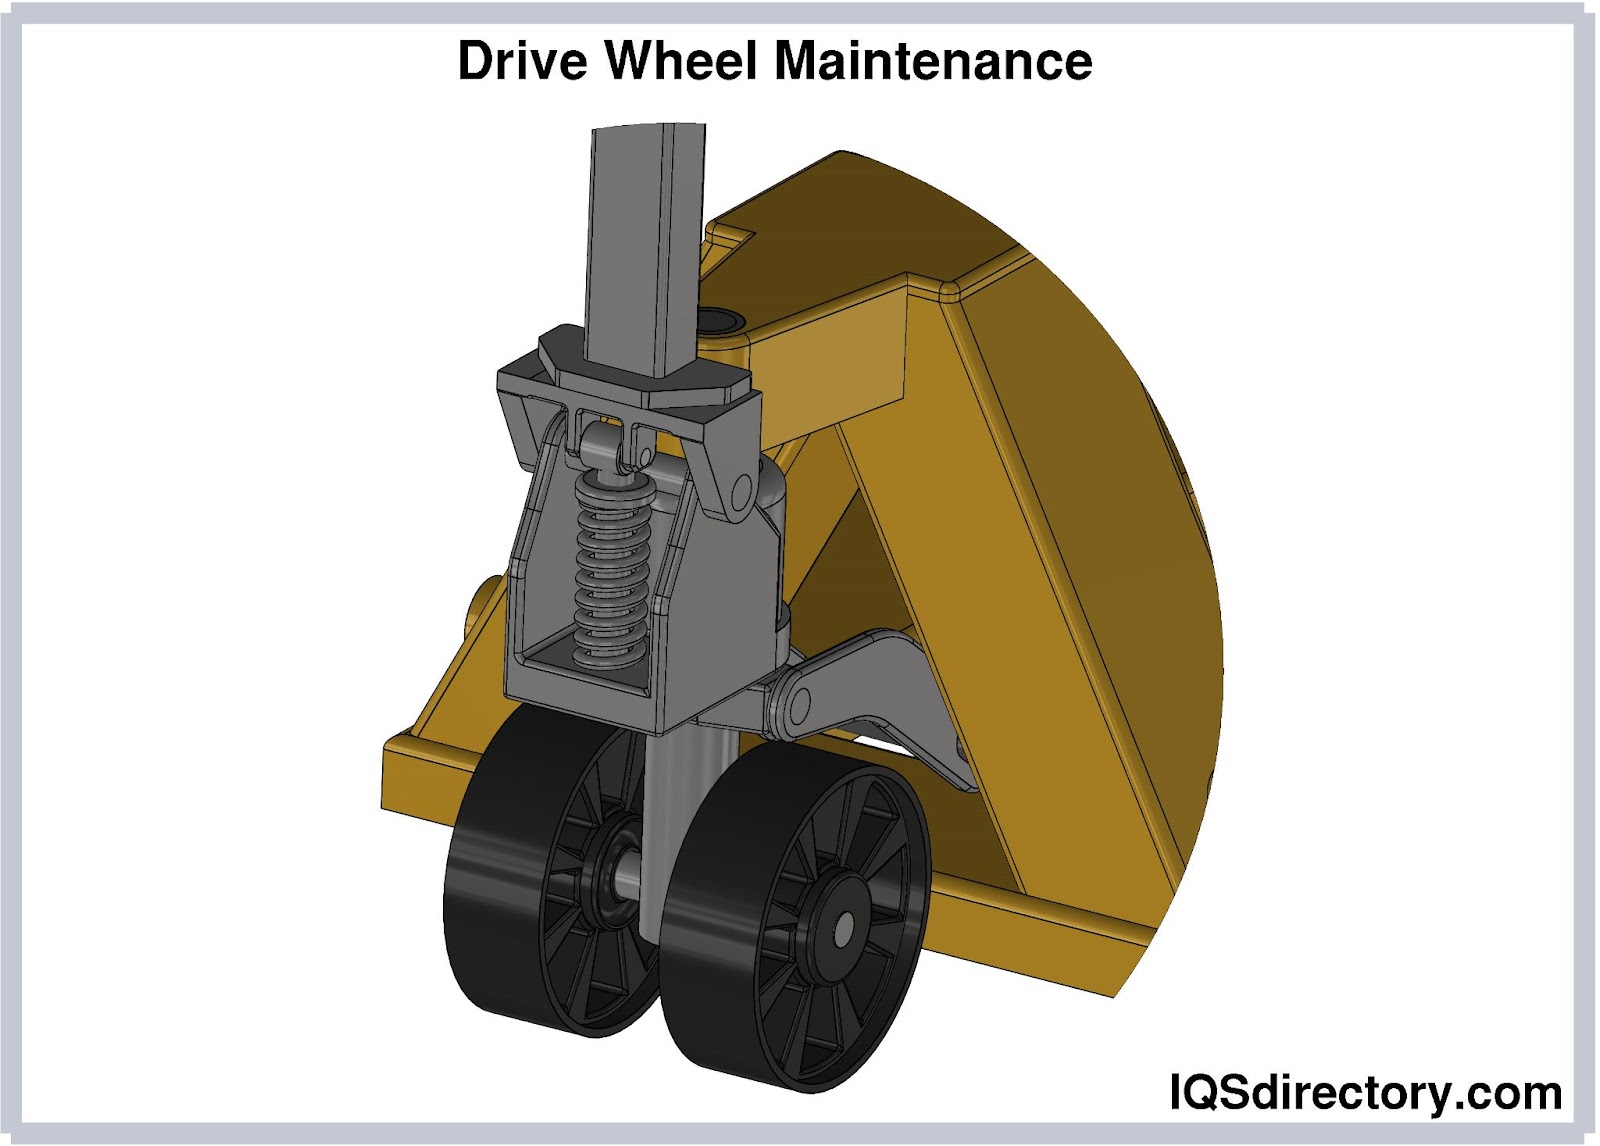 Drive Wheel Maintenance